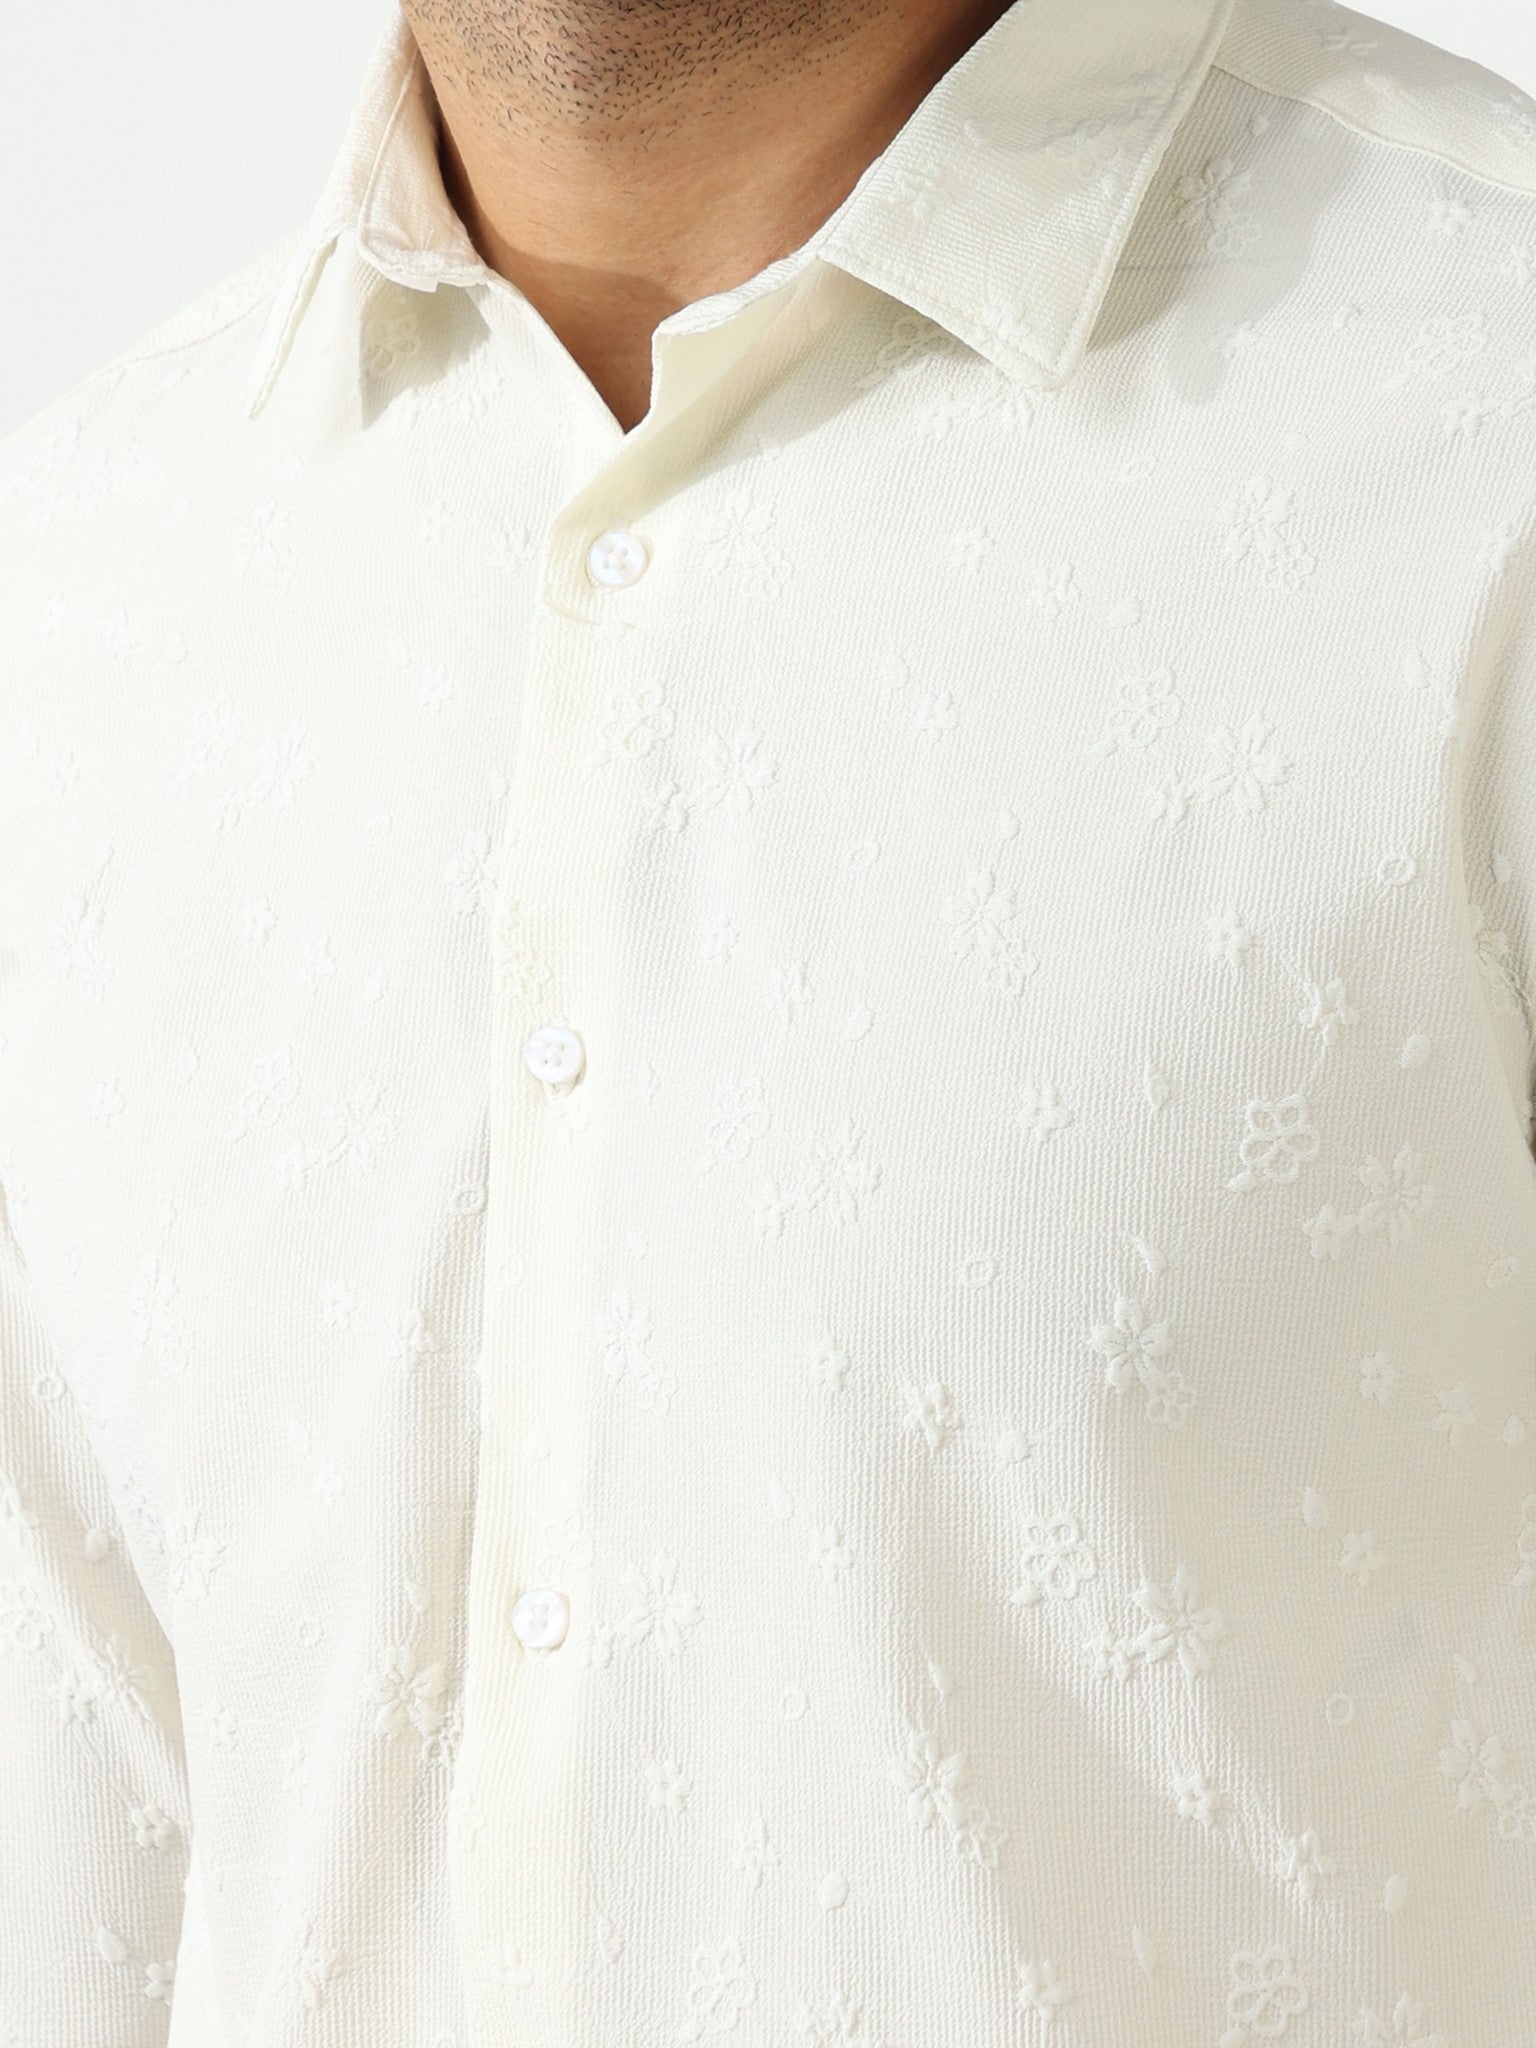 Flowly Jacquard White Shirt